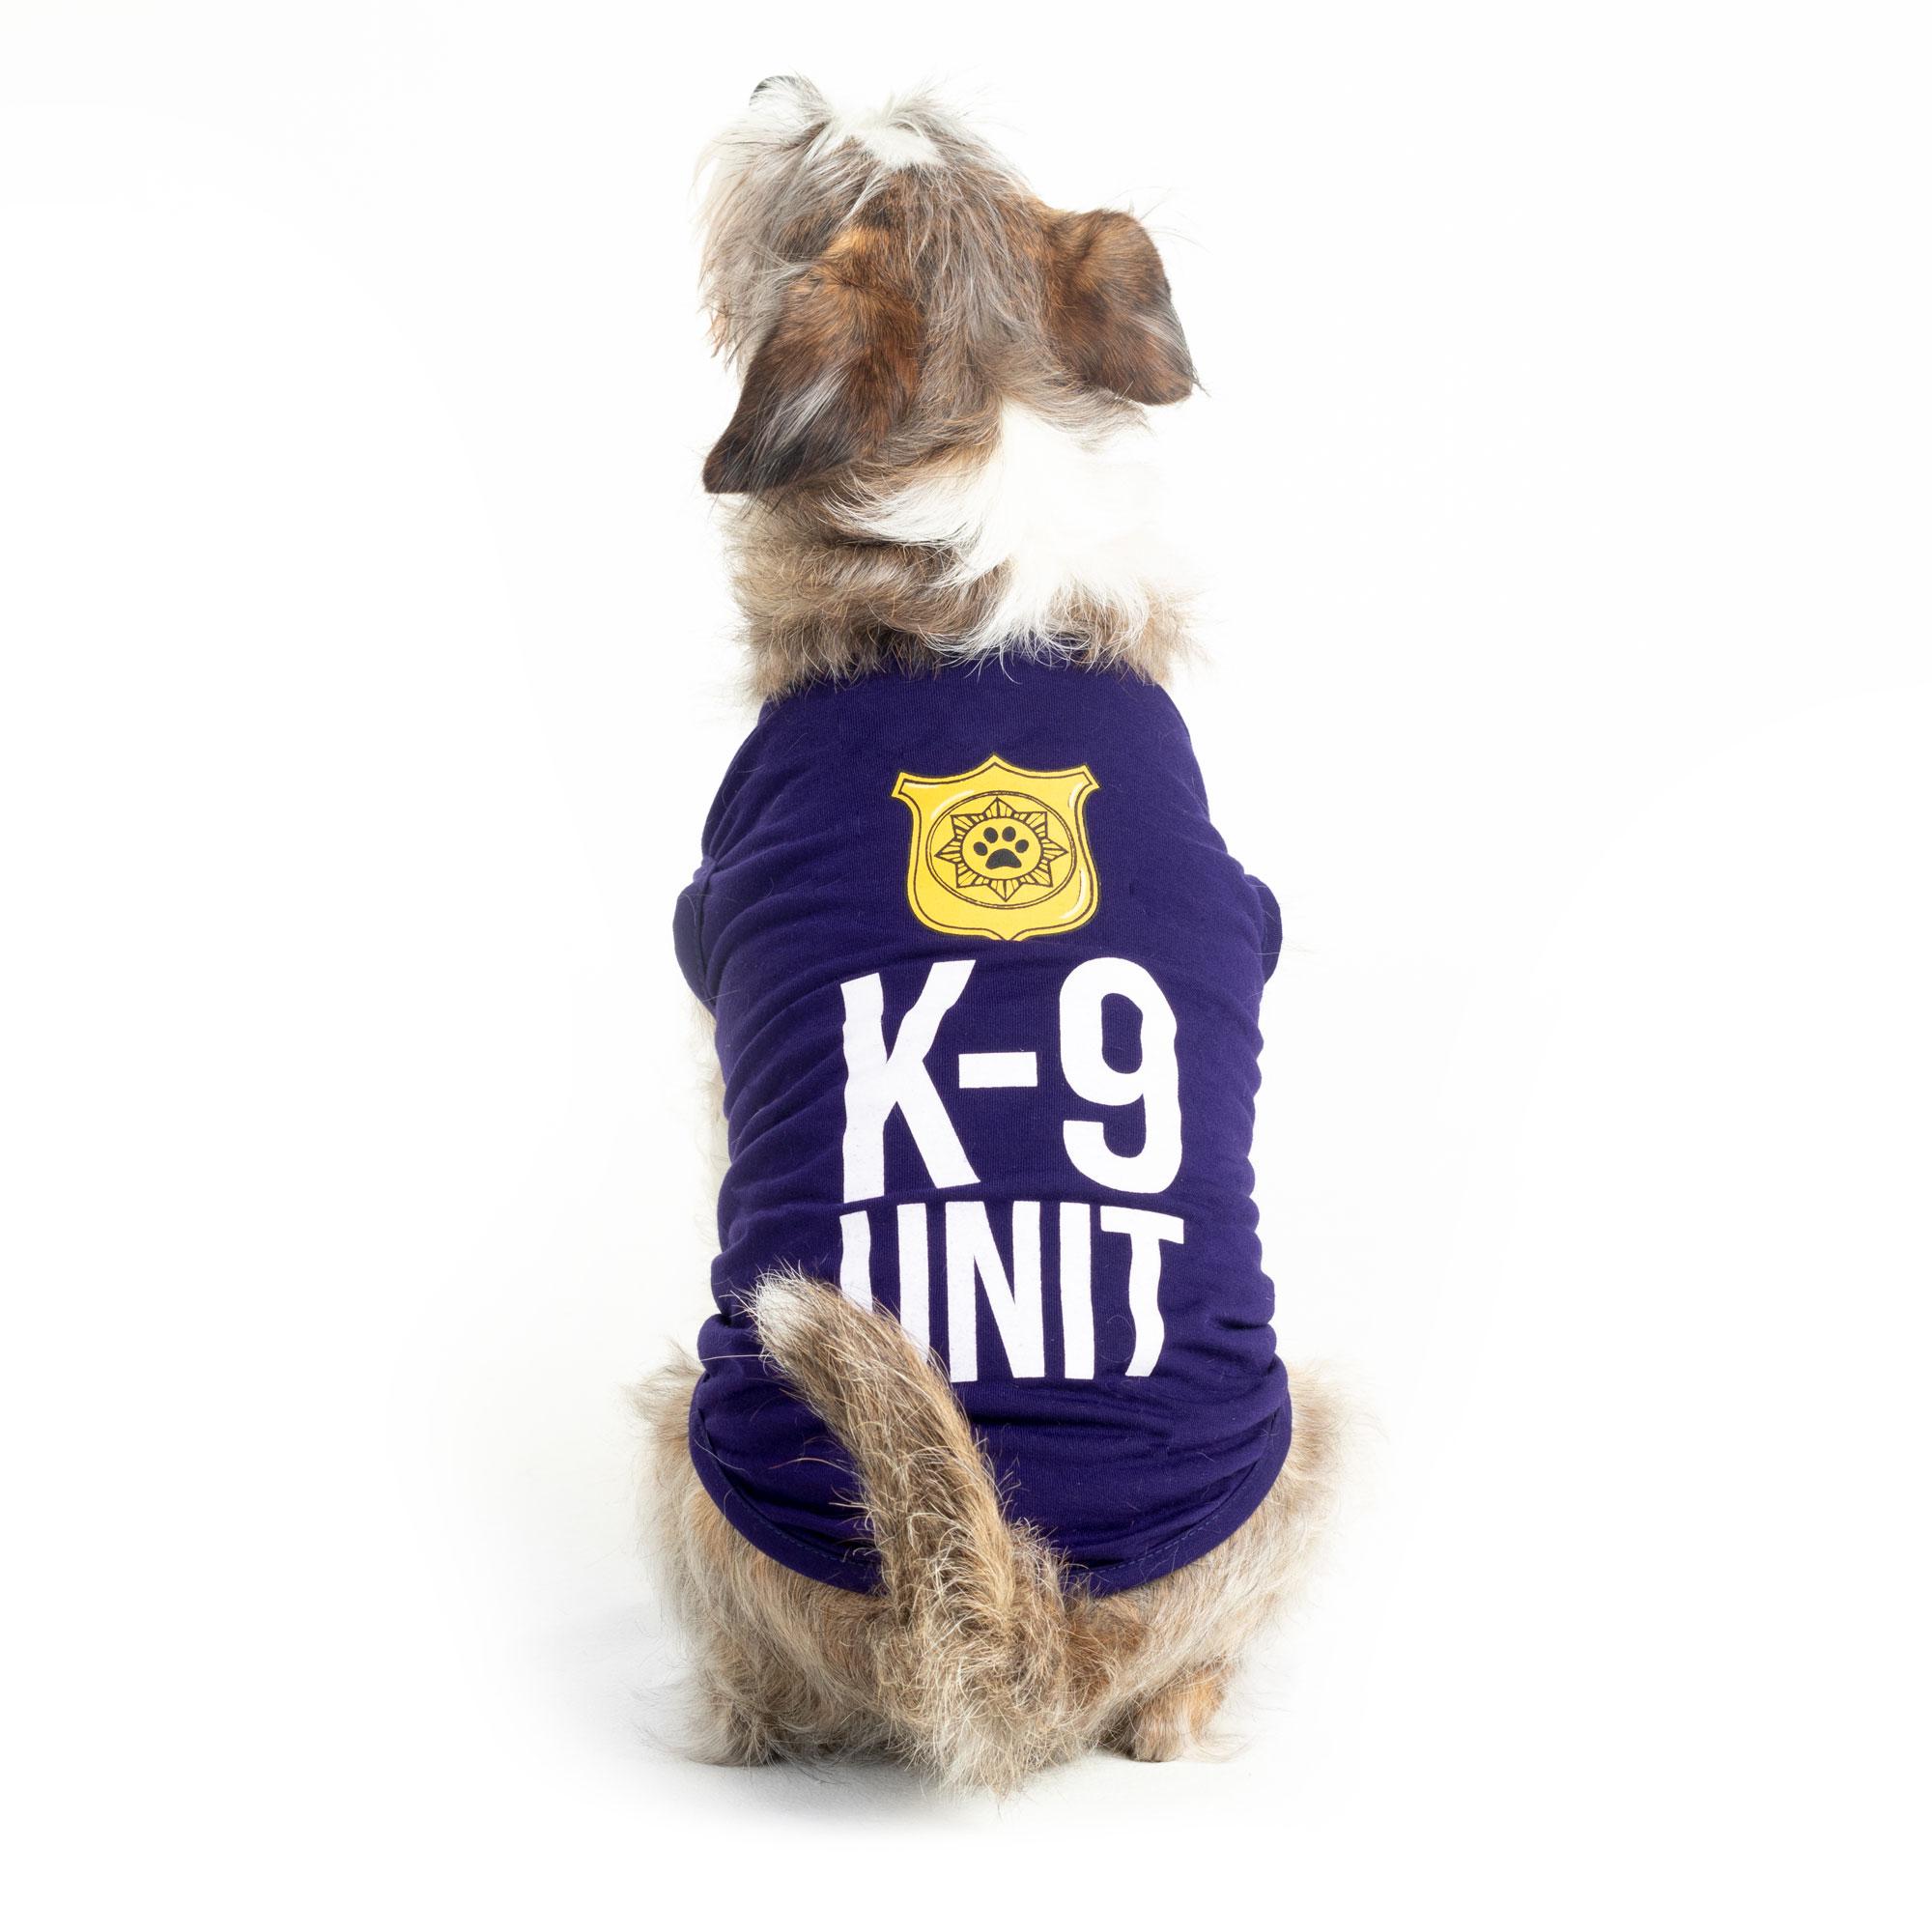 K9 Unit Dog Costume, M